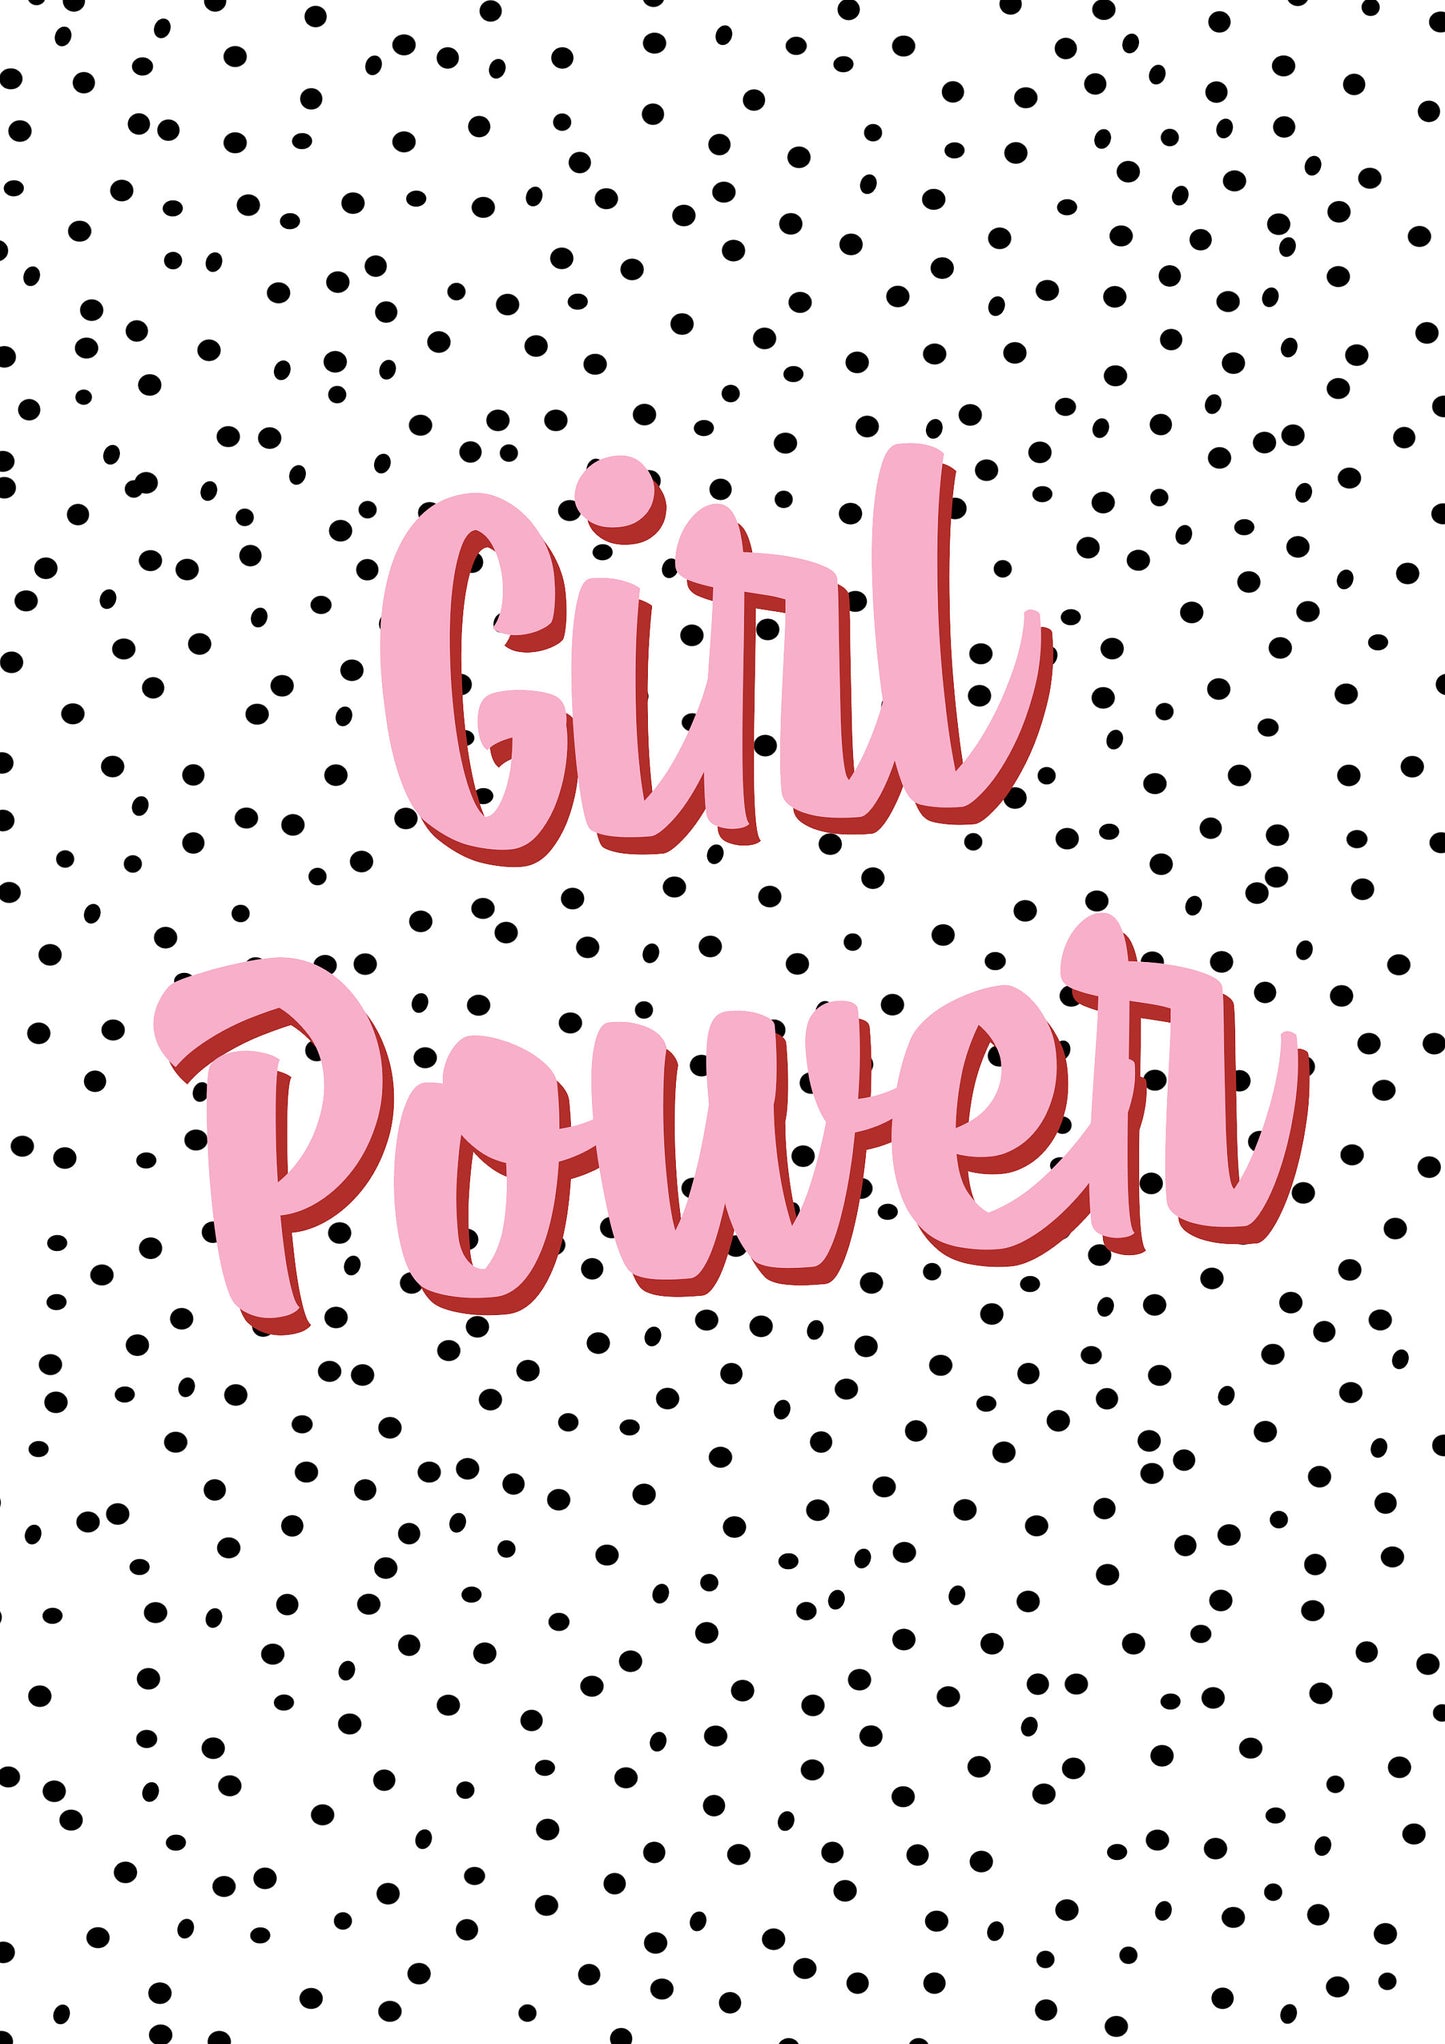 Girl Power Motivational Pink Spotty Typography Print